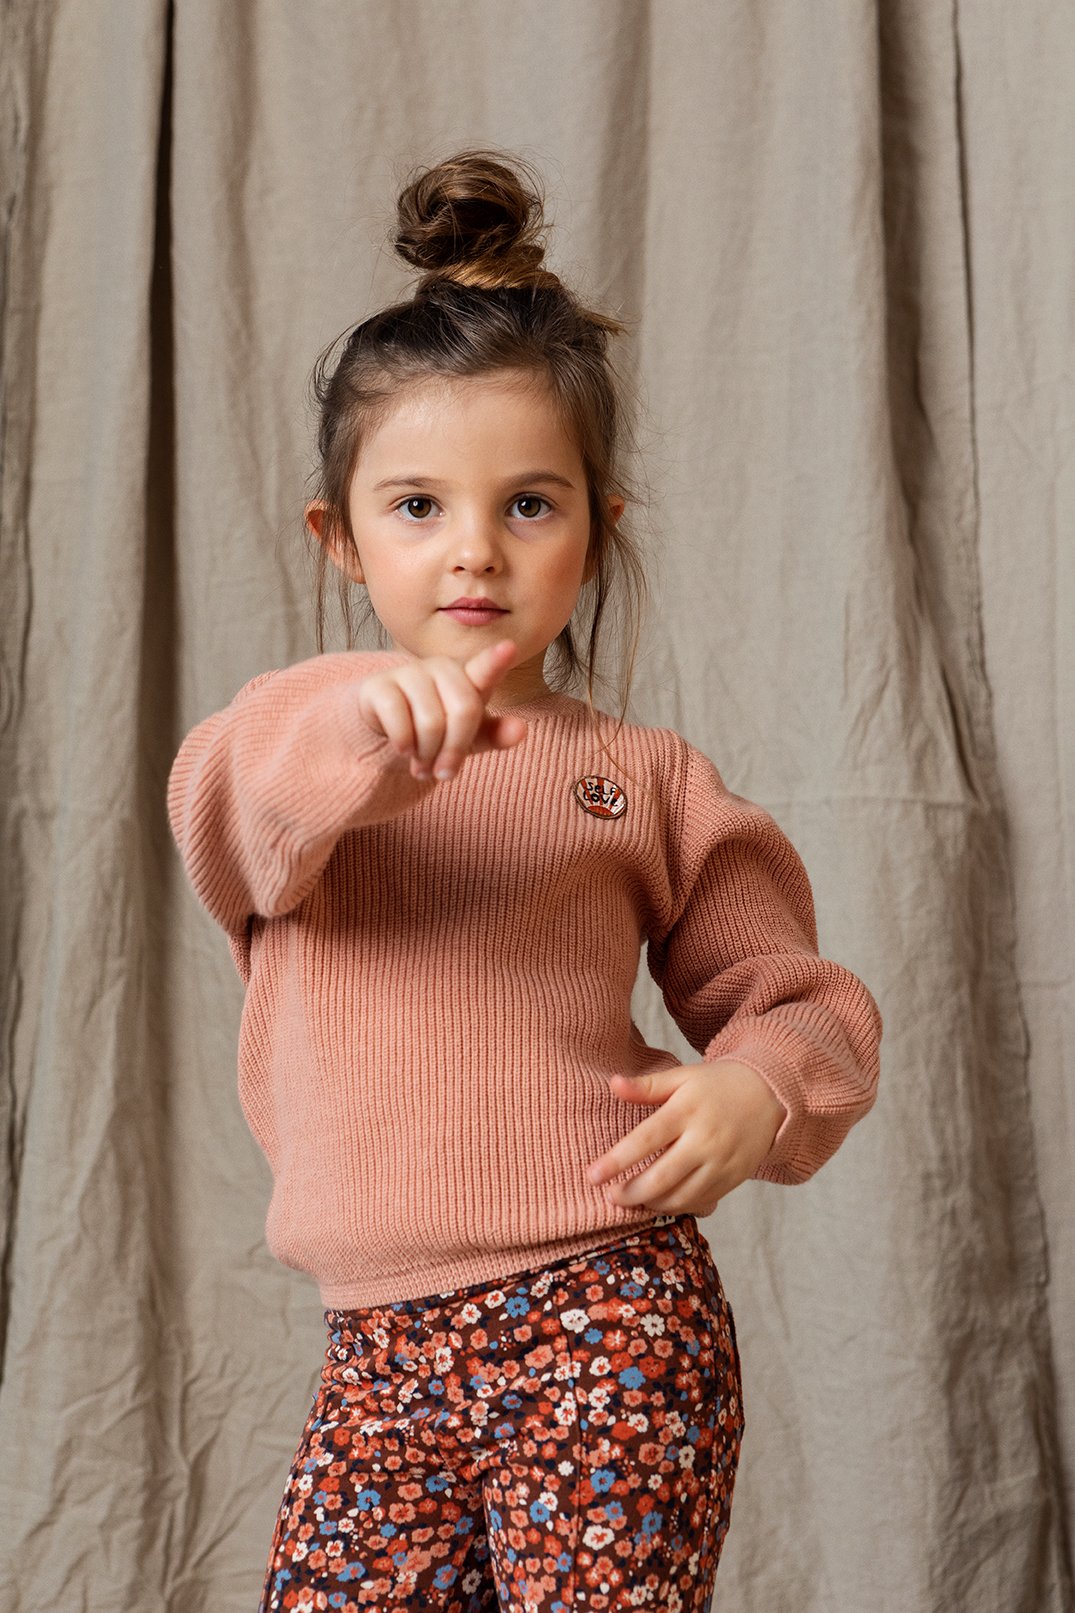 Meisjes Little knitted balloon pullover van LOOXS Little in de kleur sorbet in maat 128.